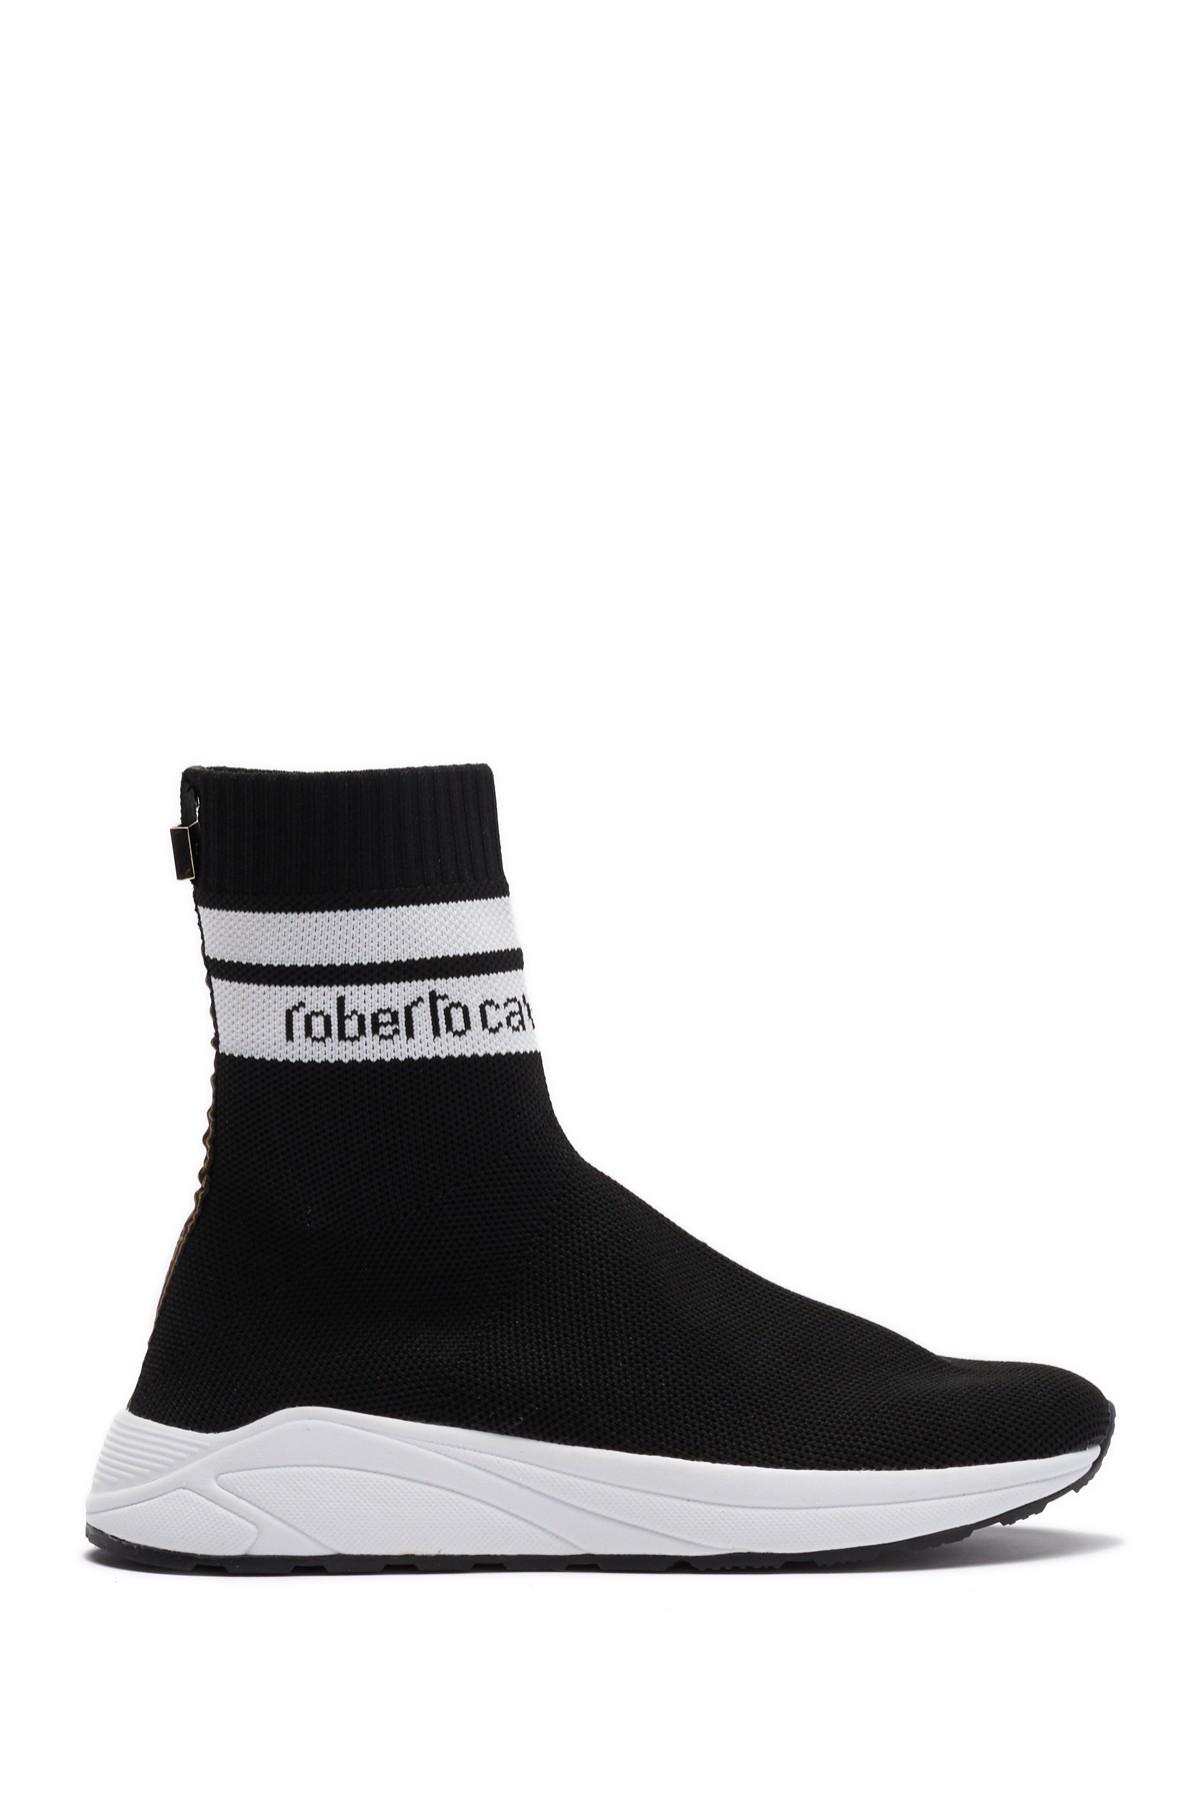 Roberto Cavalli High-top Knit Sock Sneaker Black -